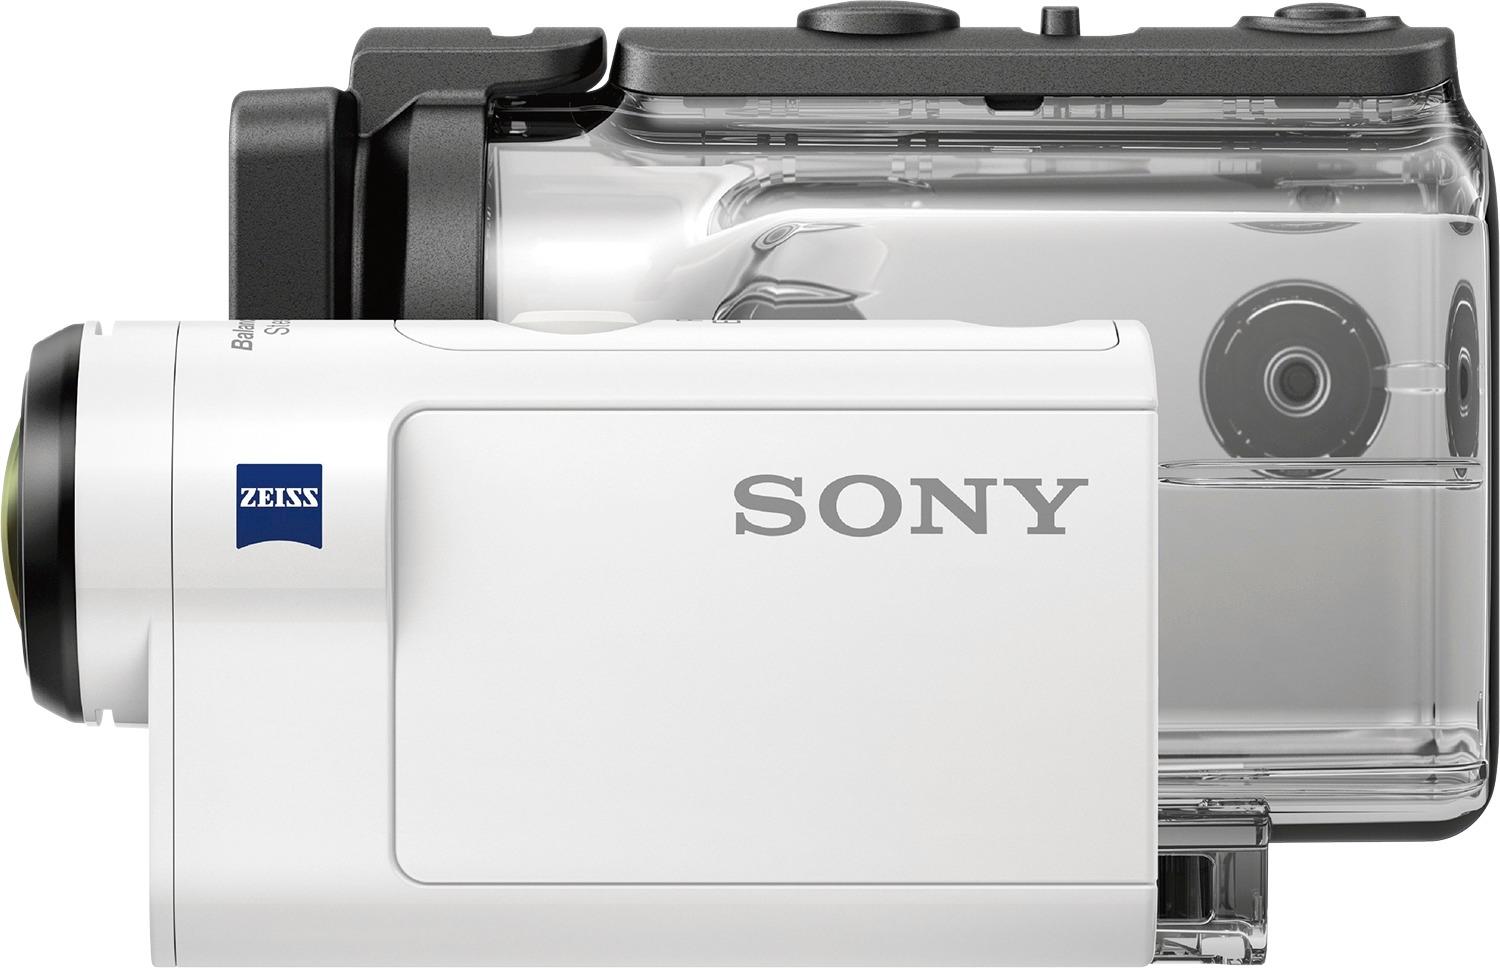 Best Buy: Sony AS300 Waterproof Action Camera White HDRAS300/W